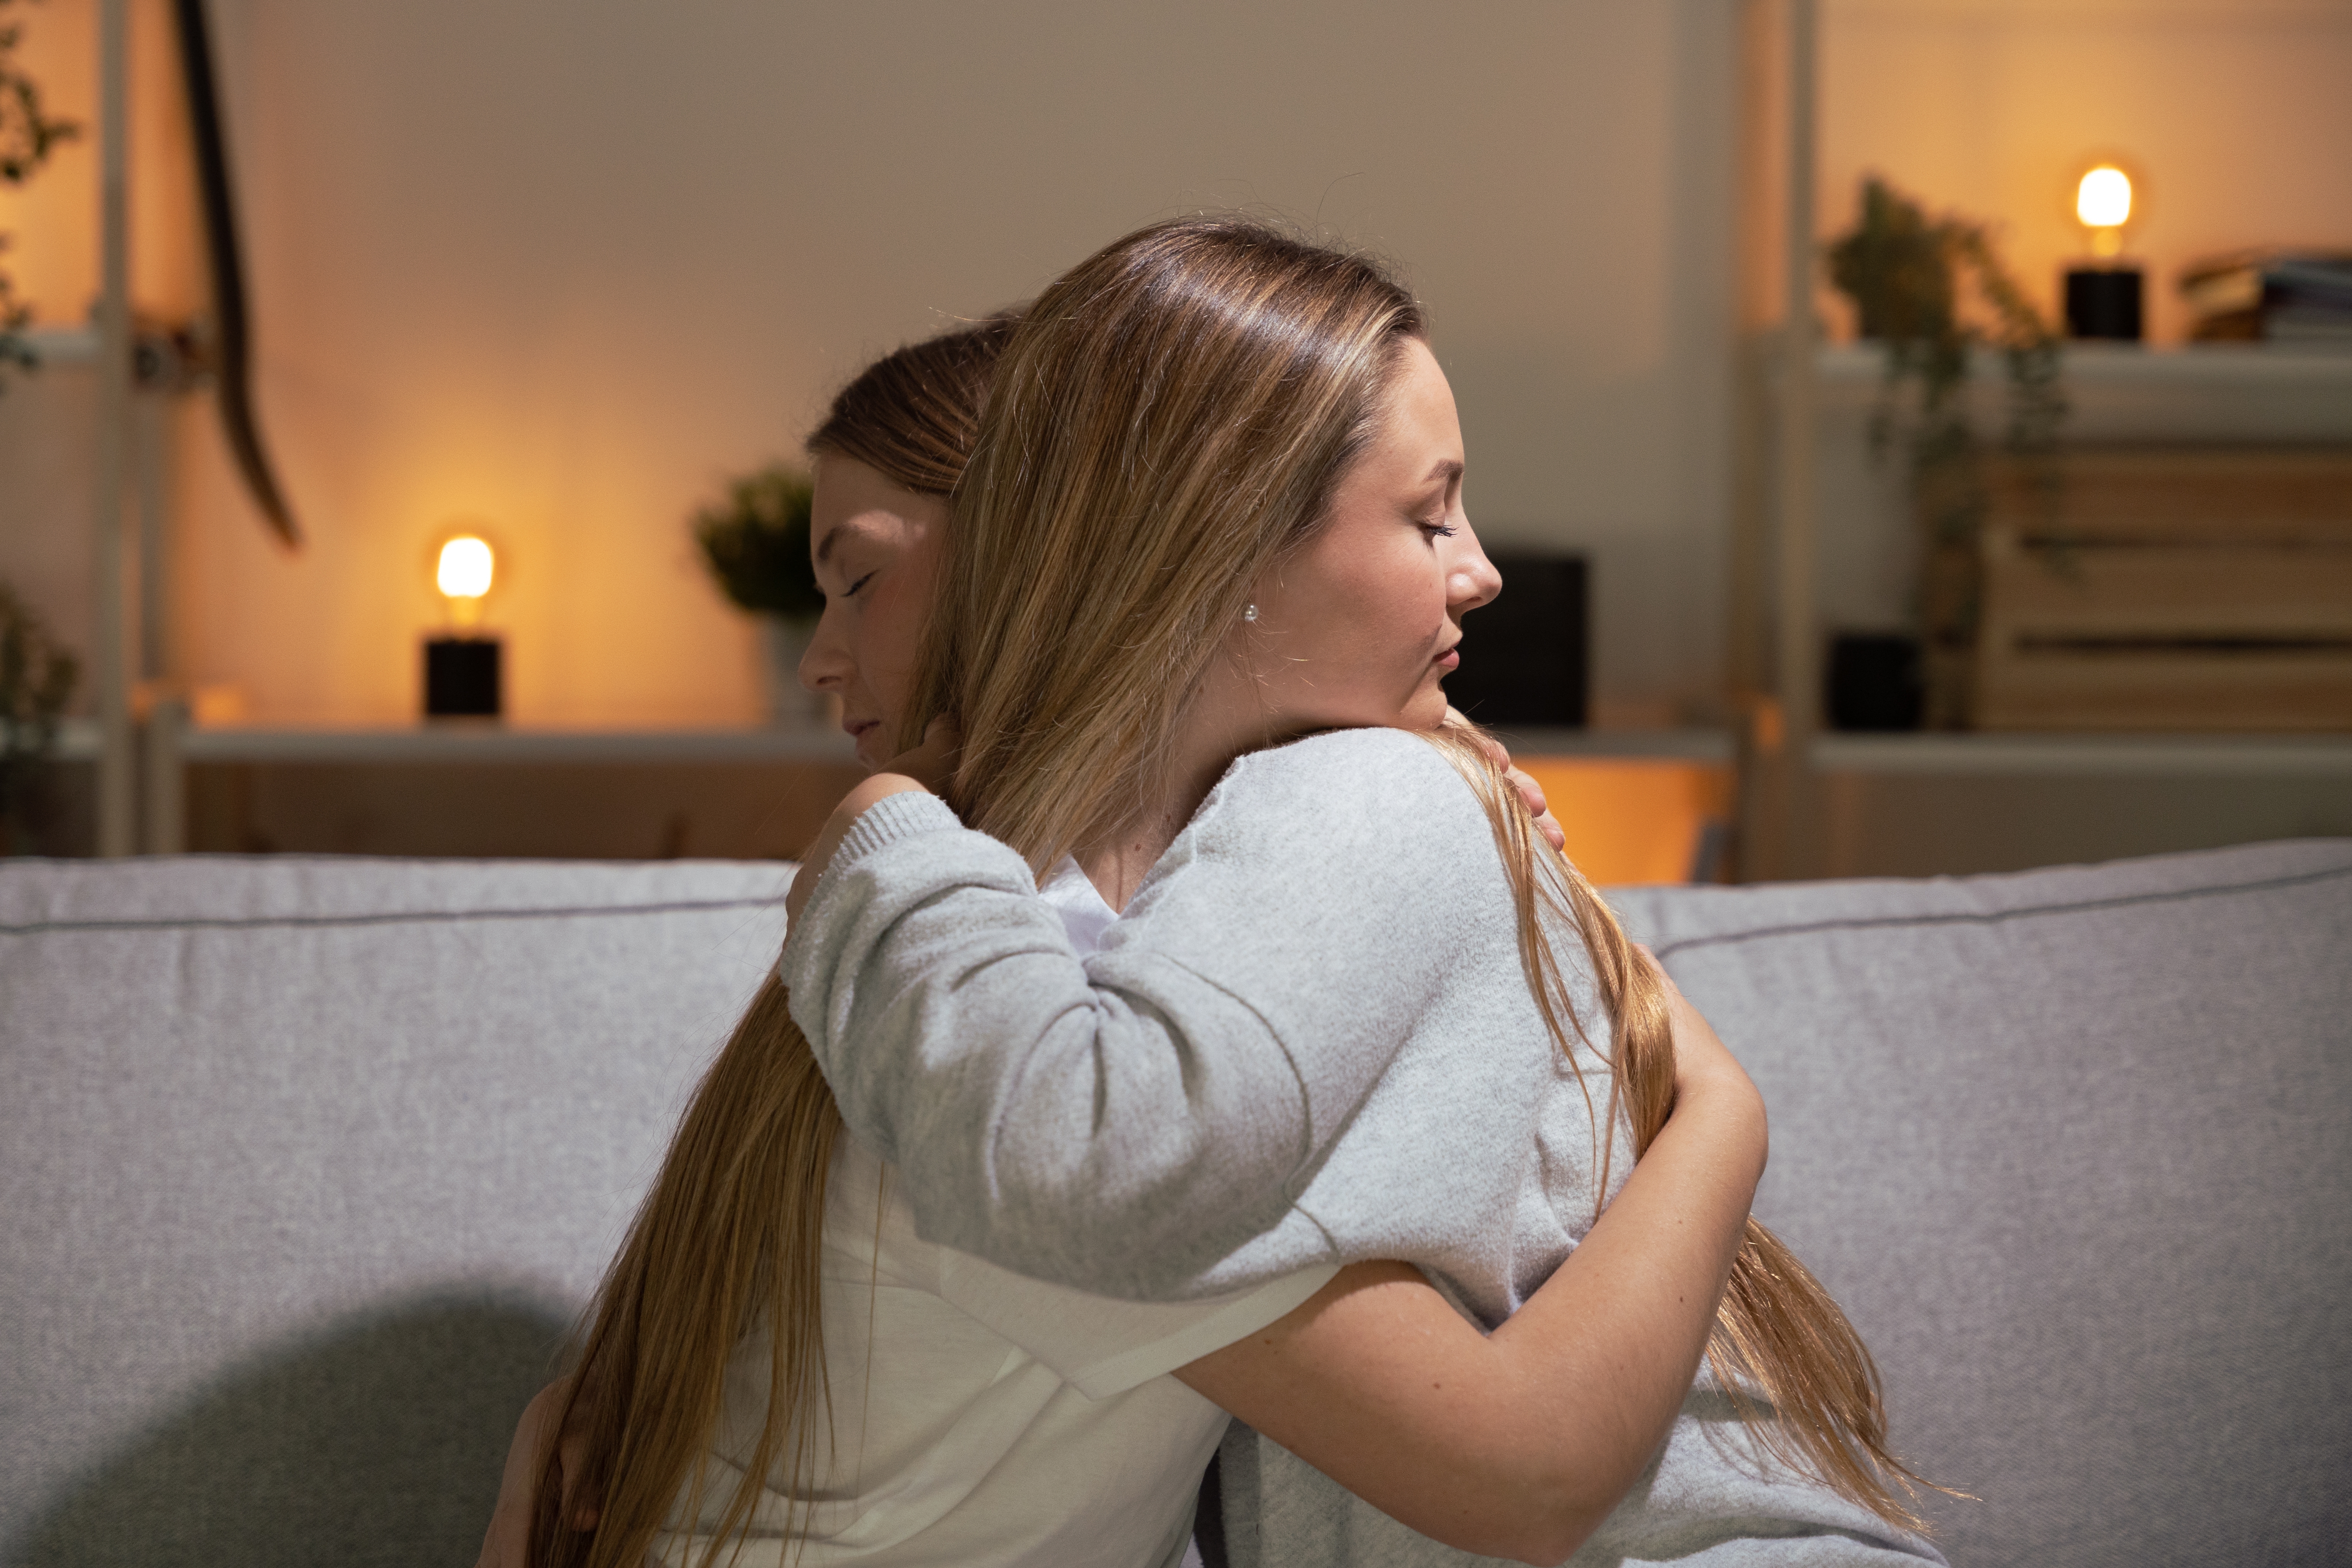 Two women hugging each other | Source: Shutterstock